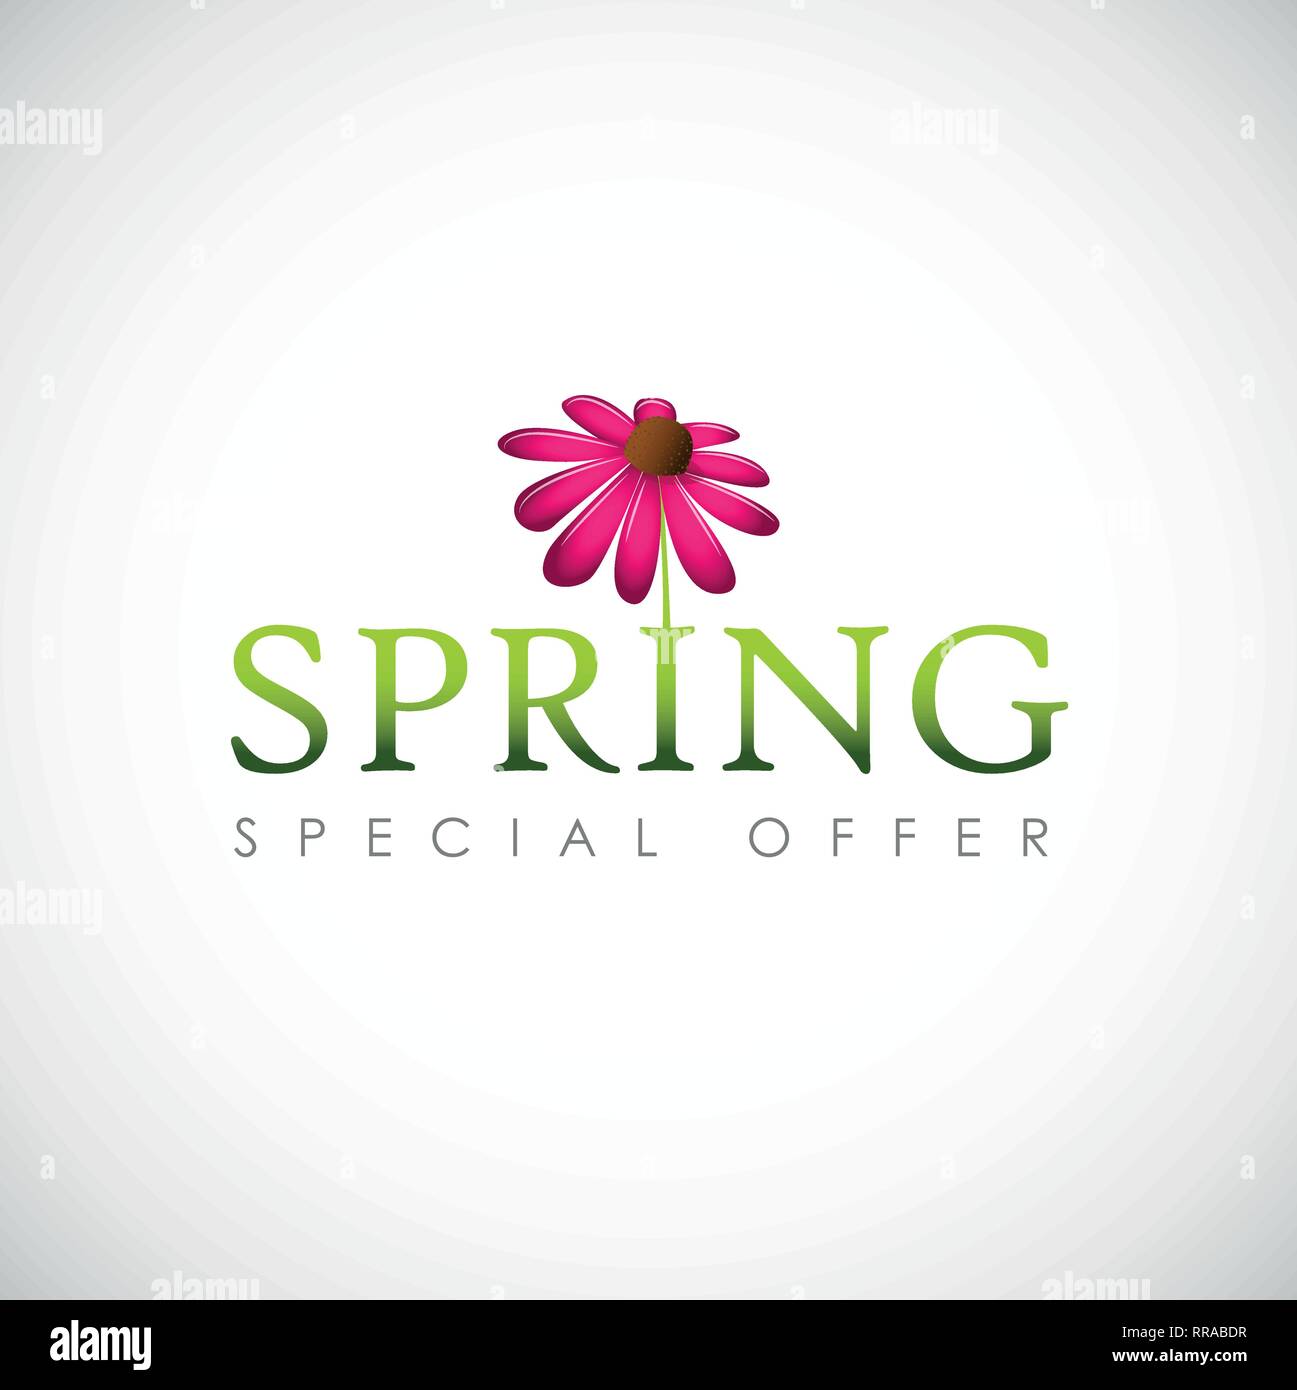 Frühling Angebot Typografie mit rosa blühende Blume Blütenblatt Vektor-illustration EPS 10. Stock Vektor